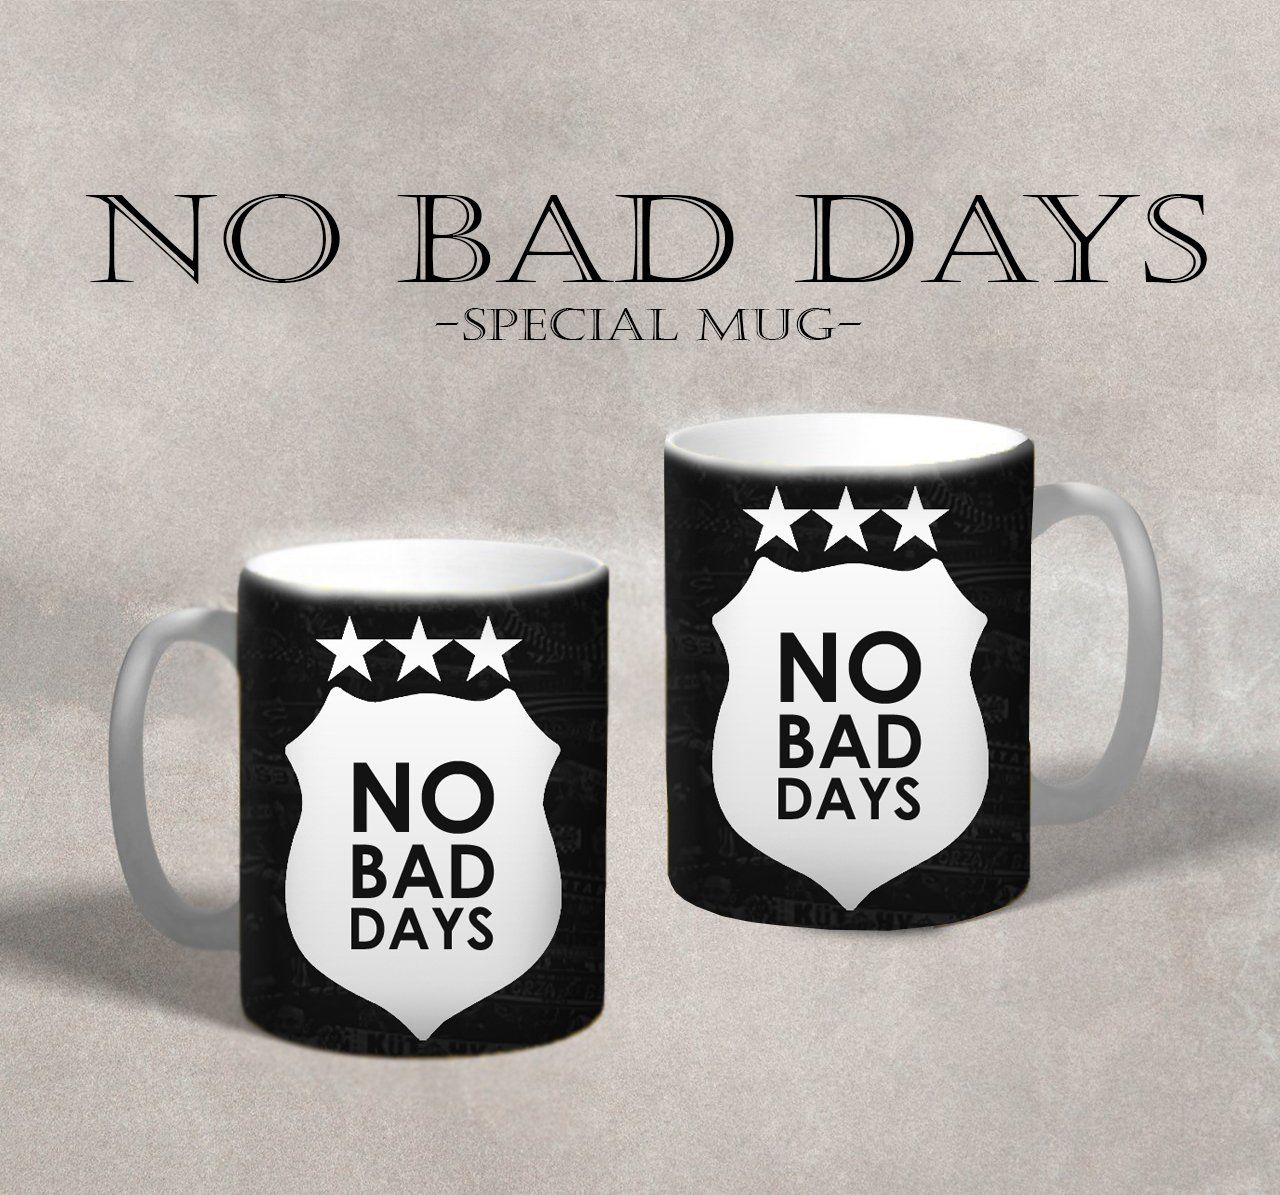 No Bad Days!